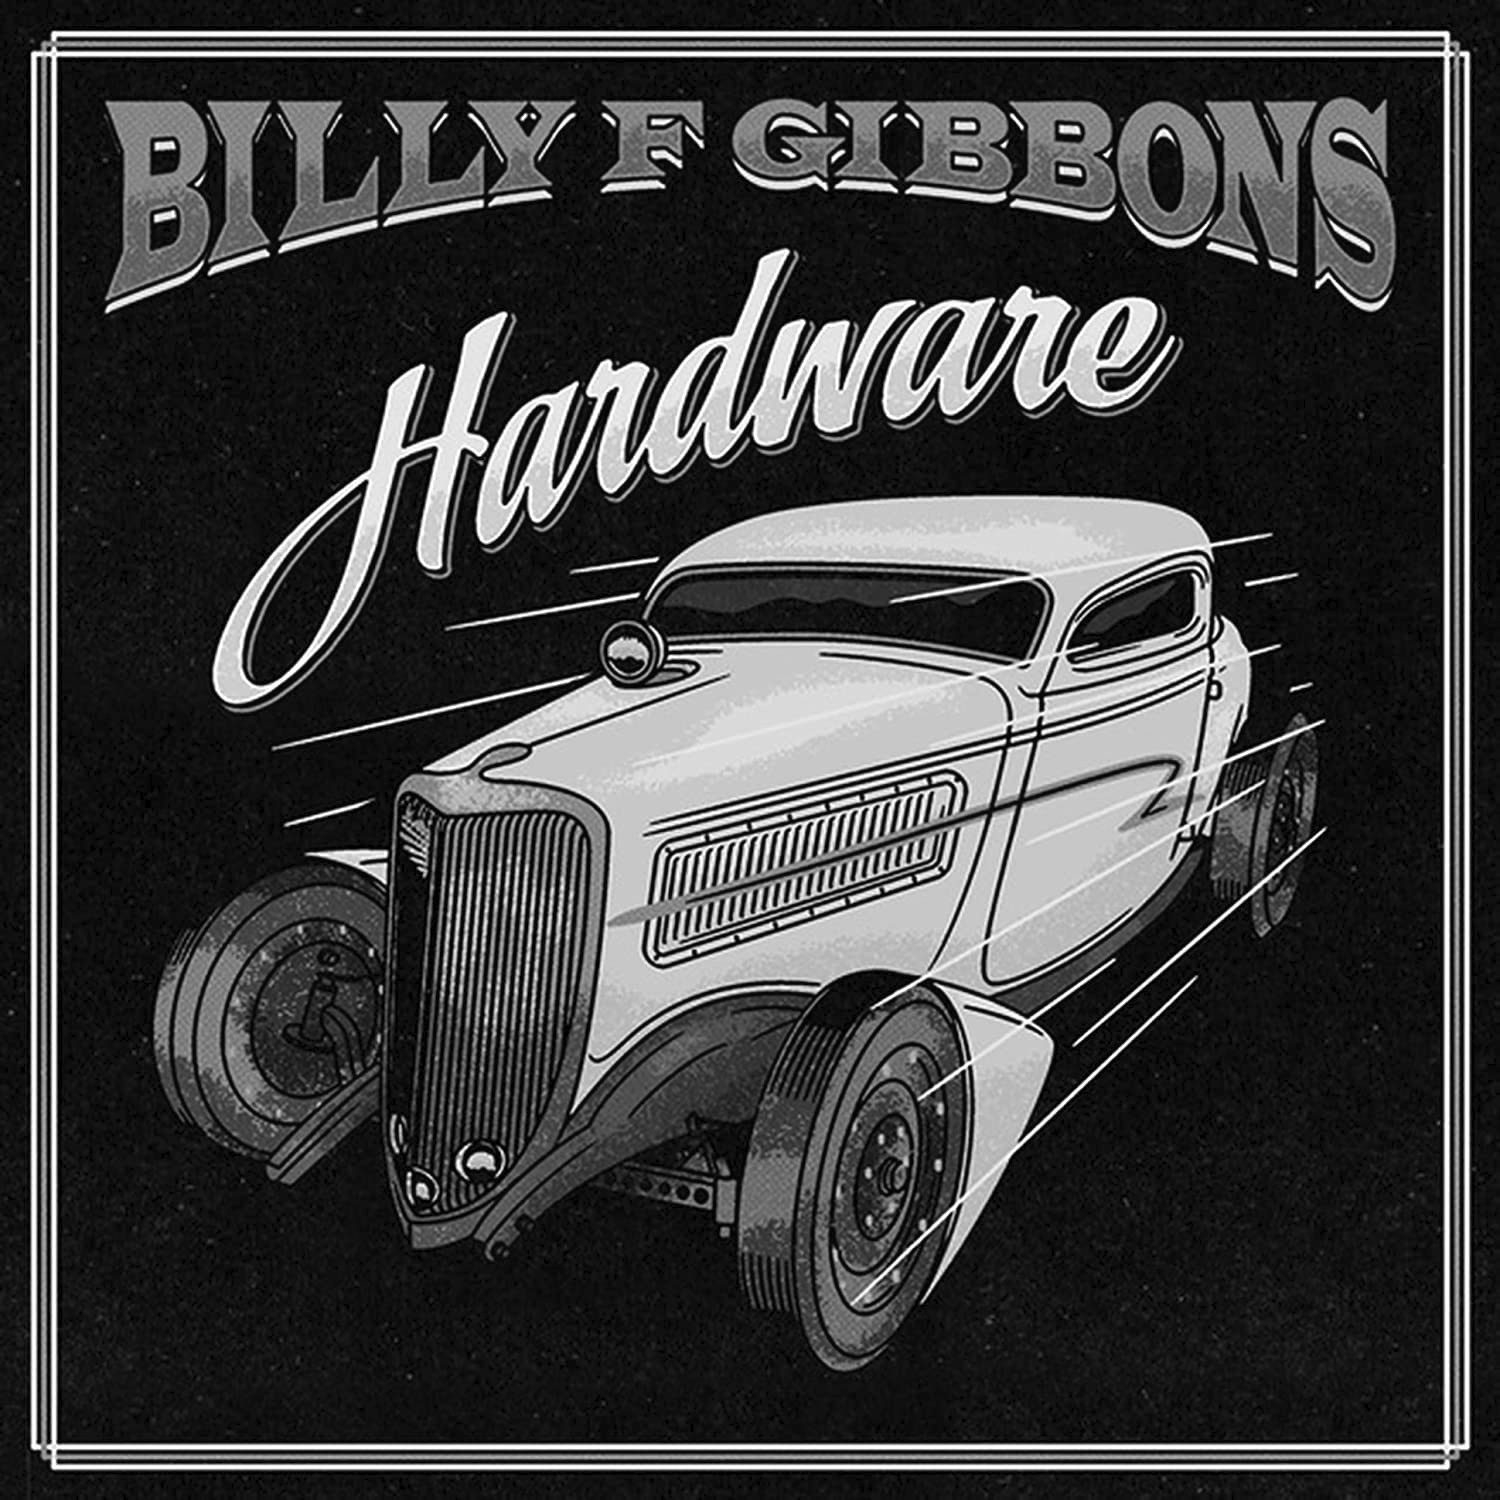 BILLY GIBBONS Hardware recensione album